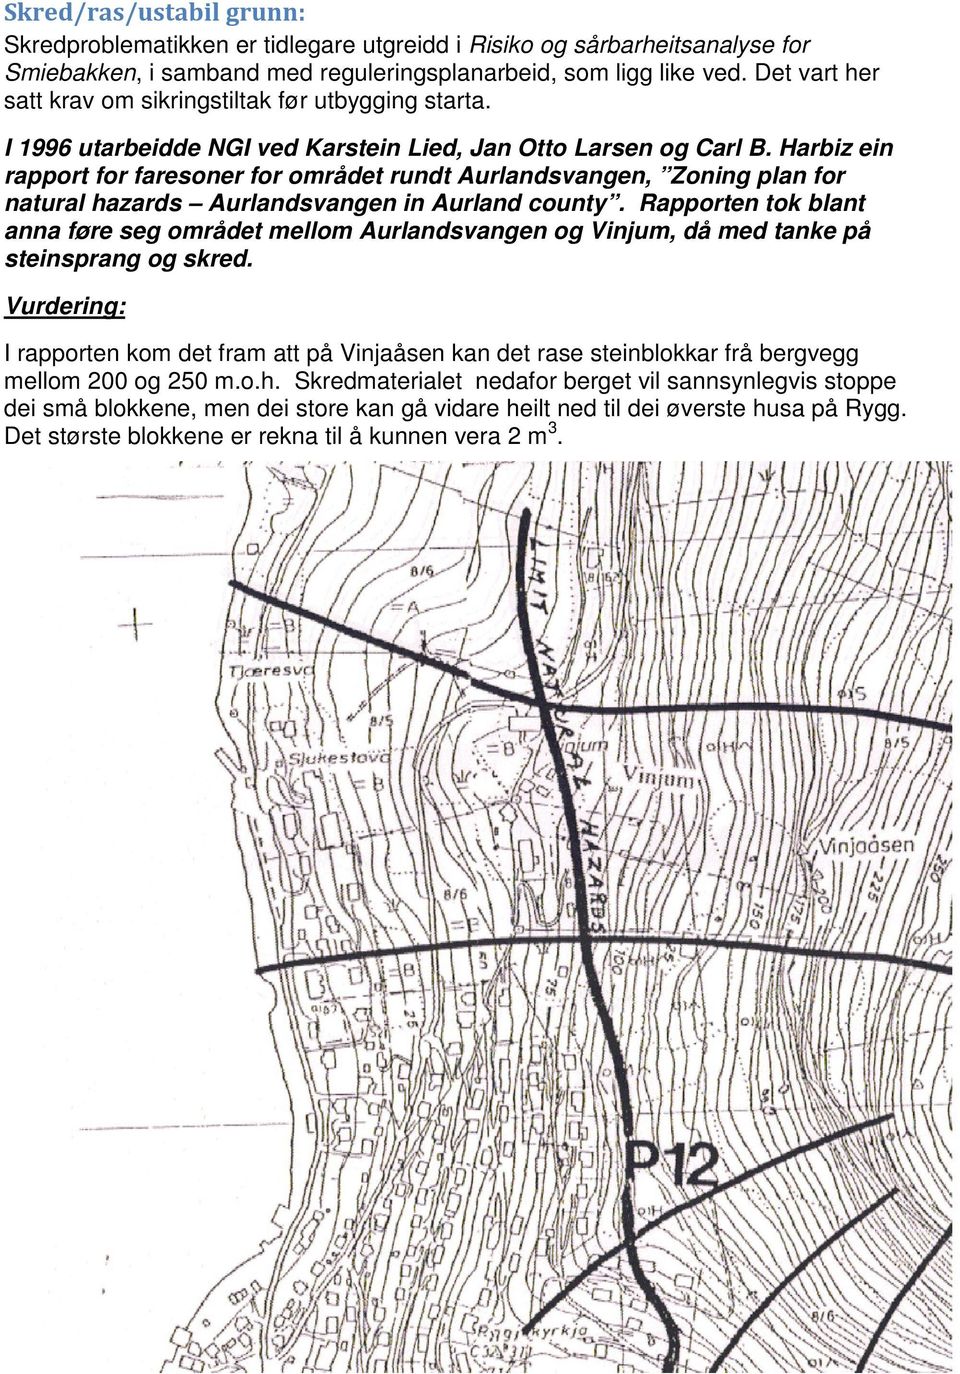 Harbiz ein rapport for faresoner for området rundt Aurlandsvangen, Zoning plan for natural hazards Aurlandsvangen in Aurland county.